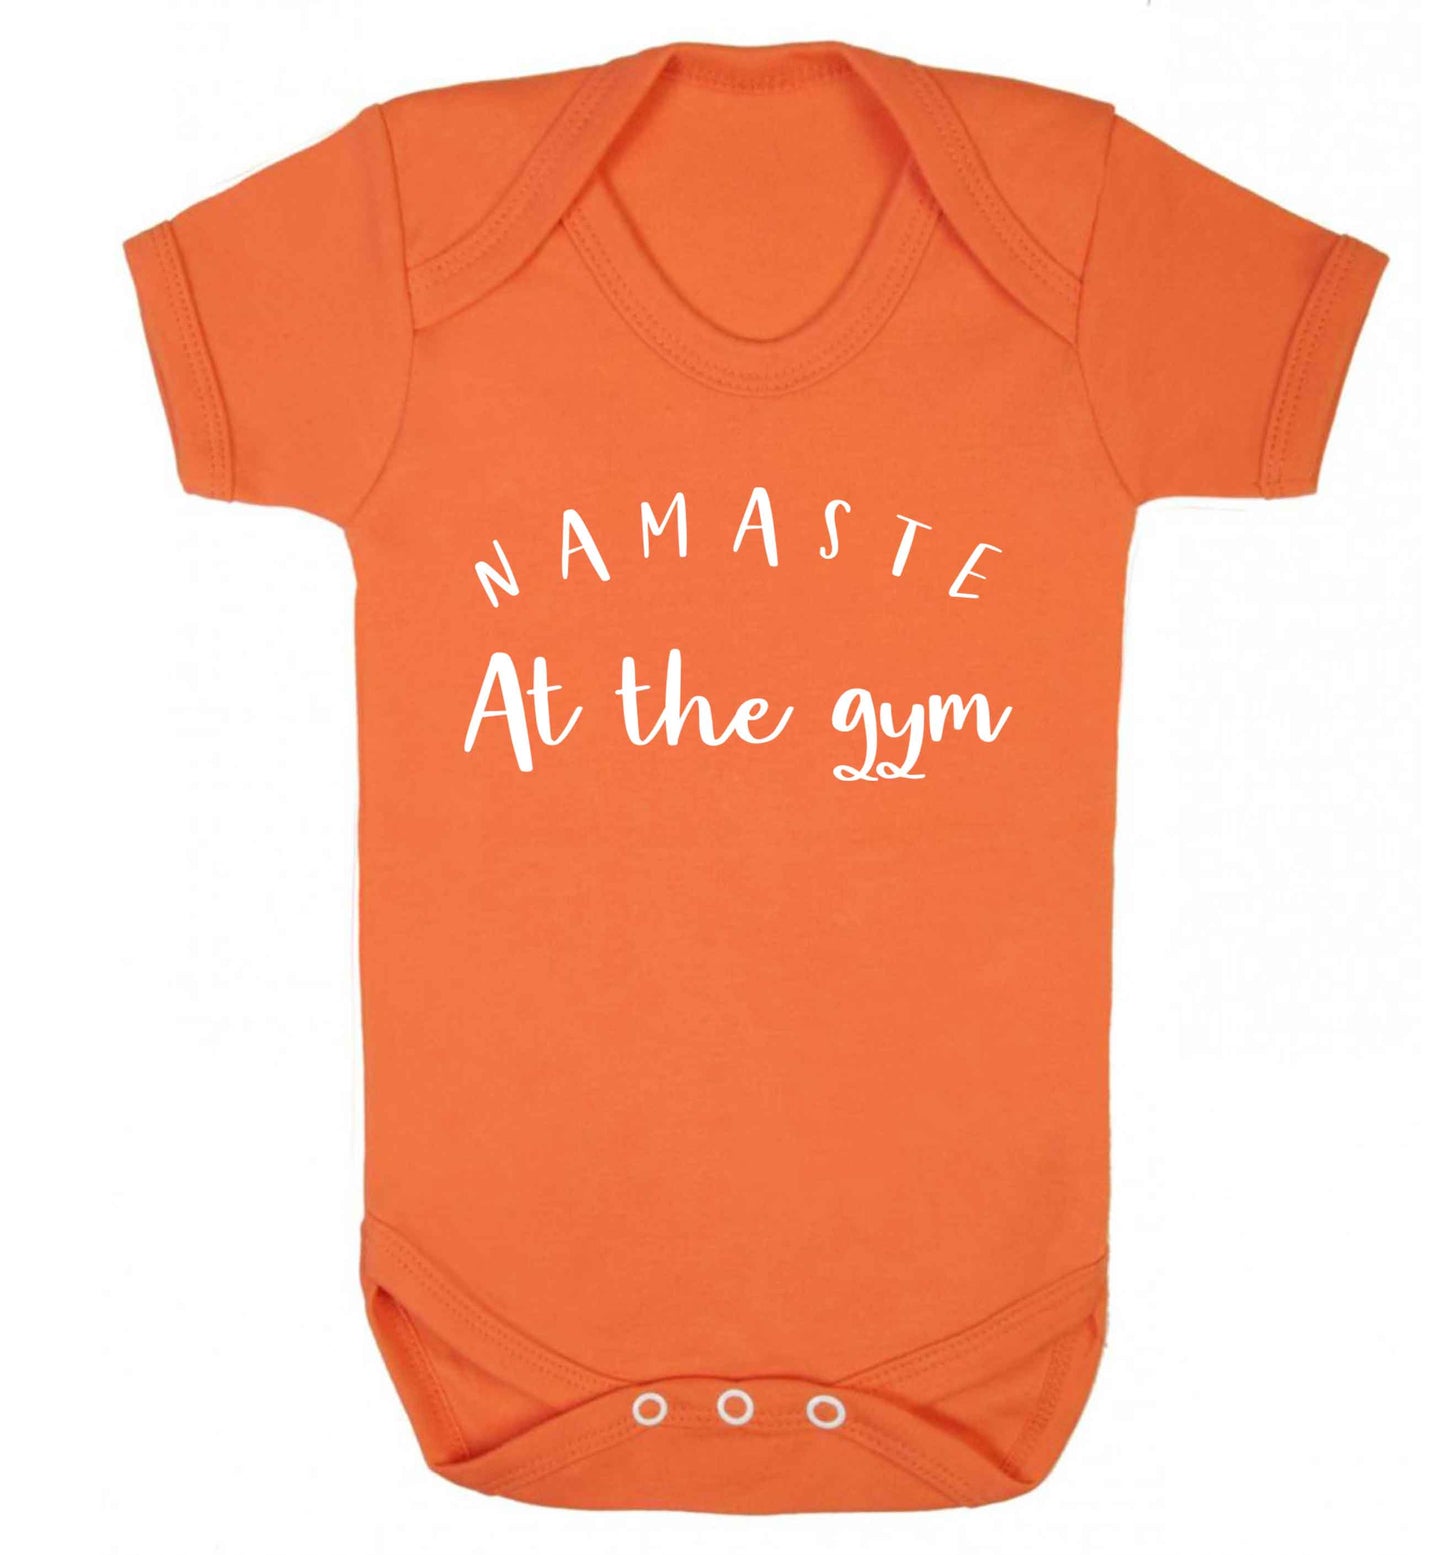 Namaste at the gym Baby Vest orange 18-24 months